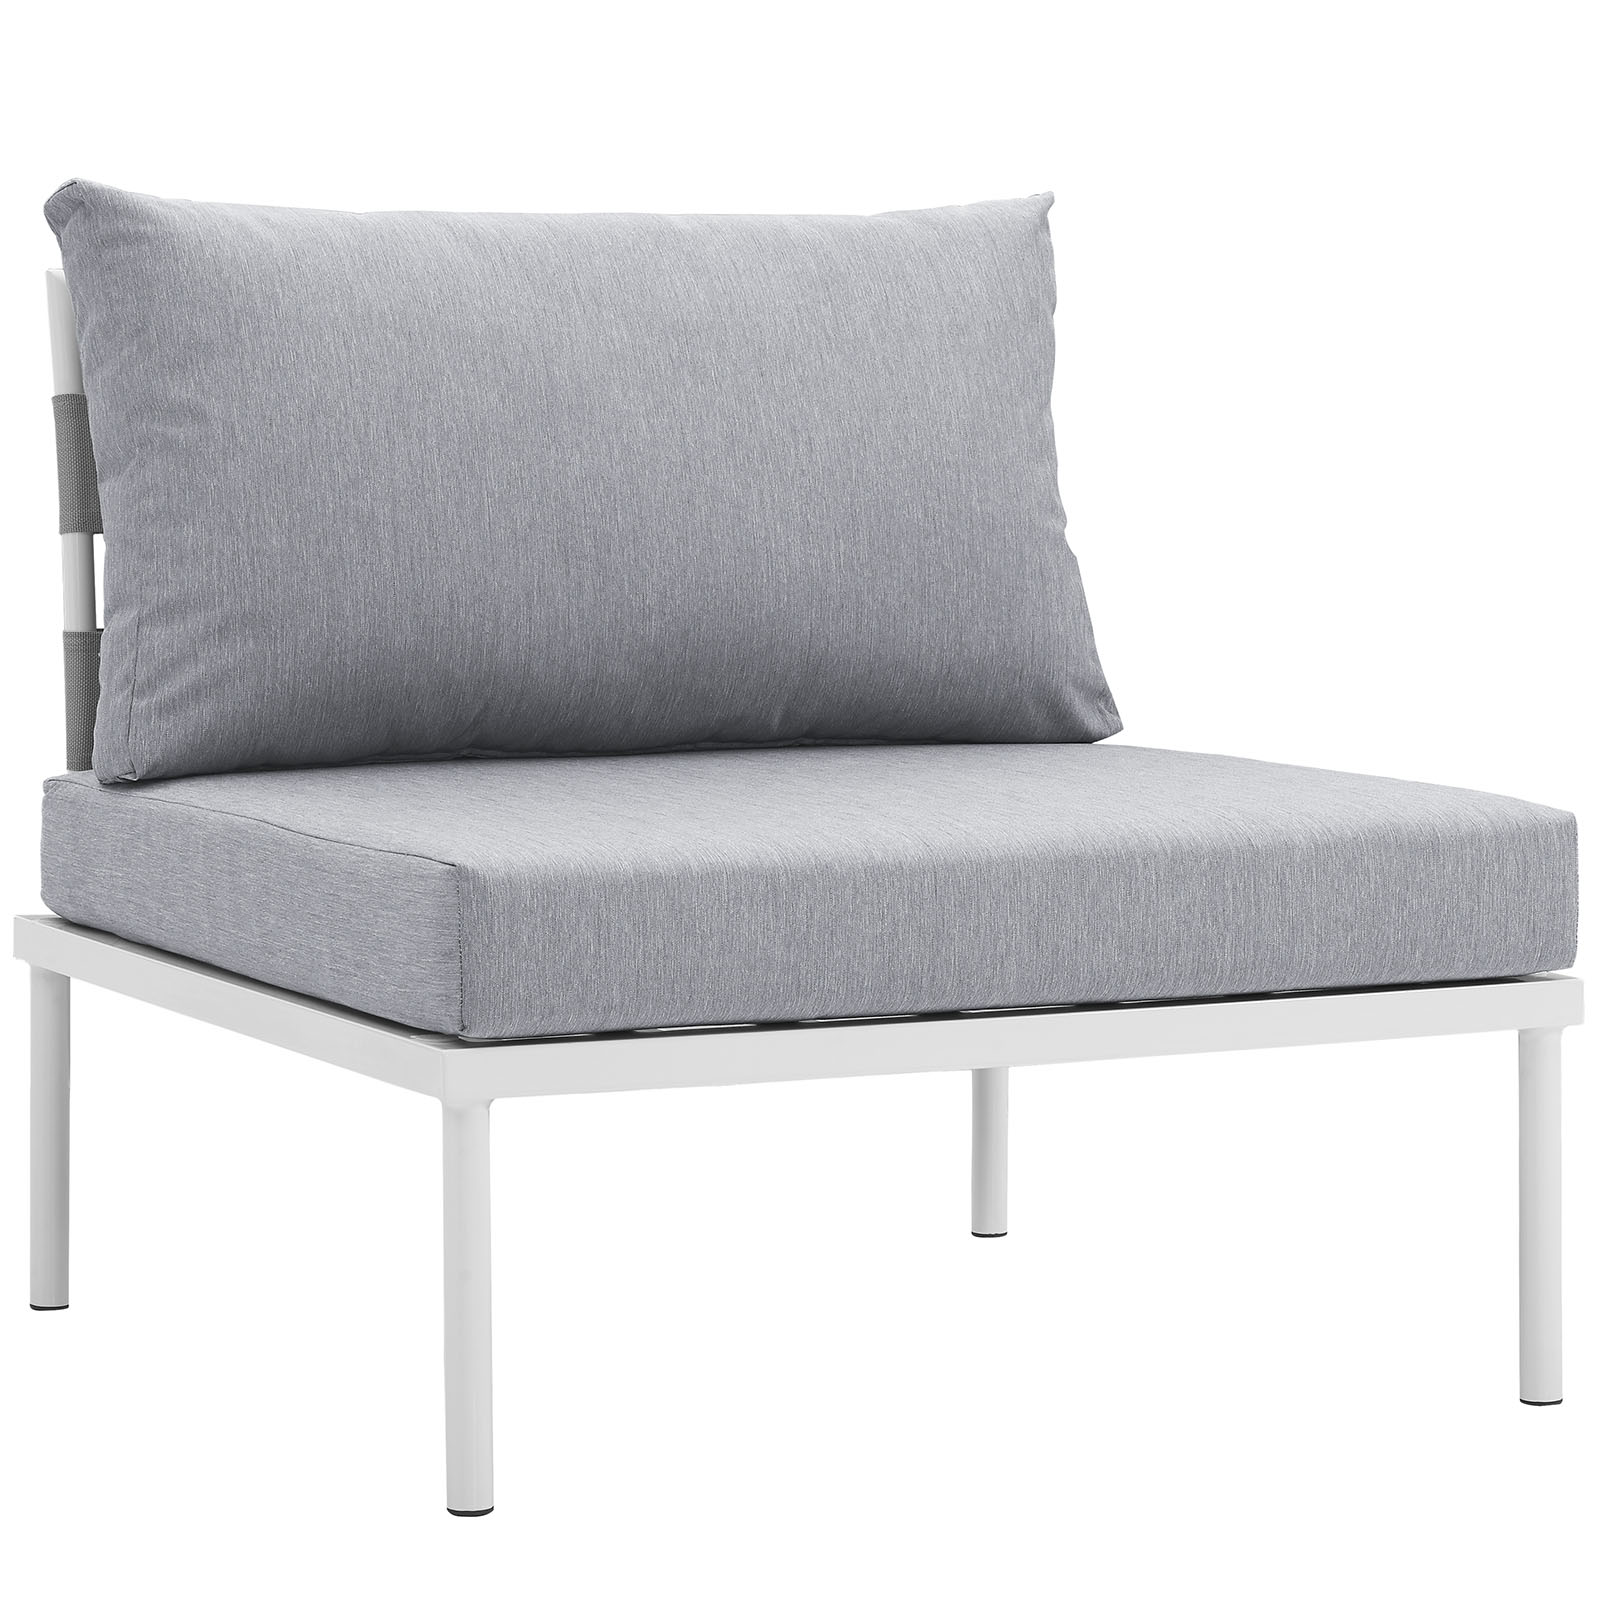 Modern Contemporary Urban Design Outdoor Patio Balcony Lounge Chair, Grey White Gray, Rattan - image 1 of 5